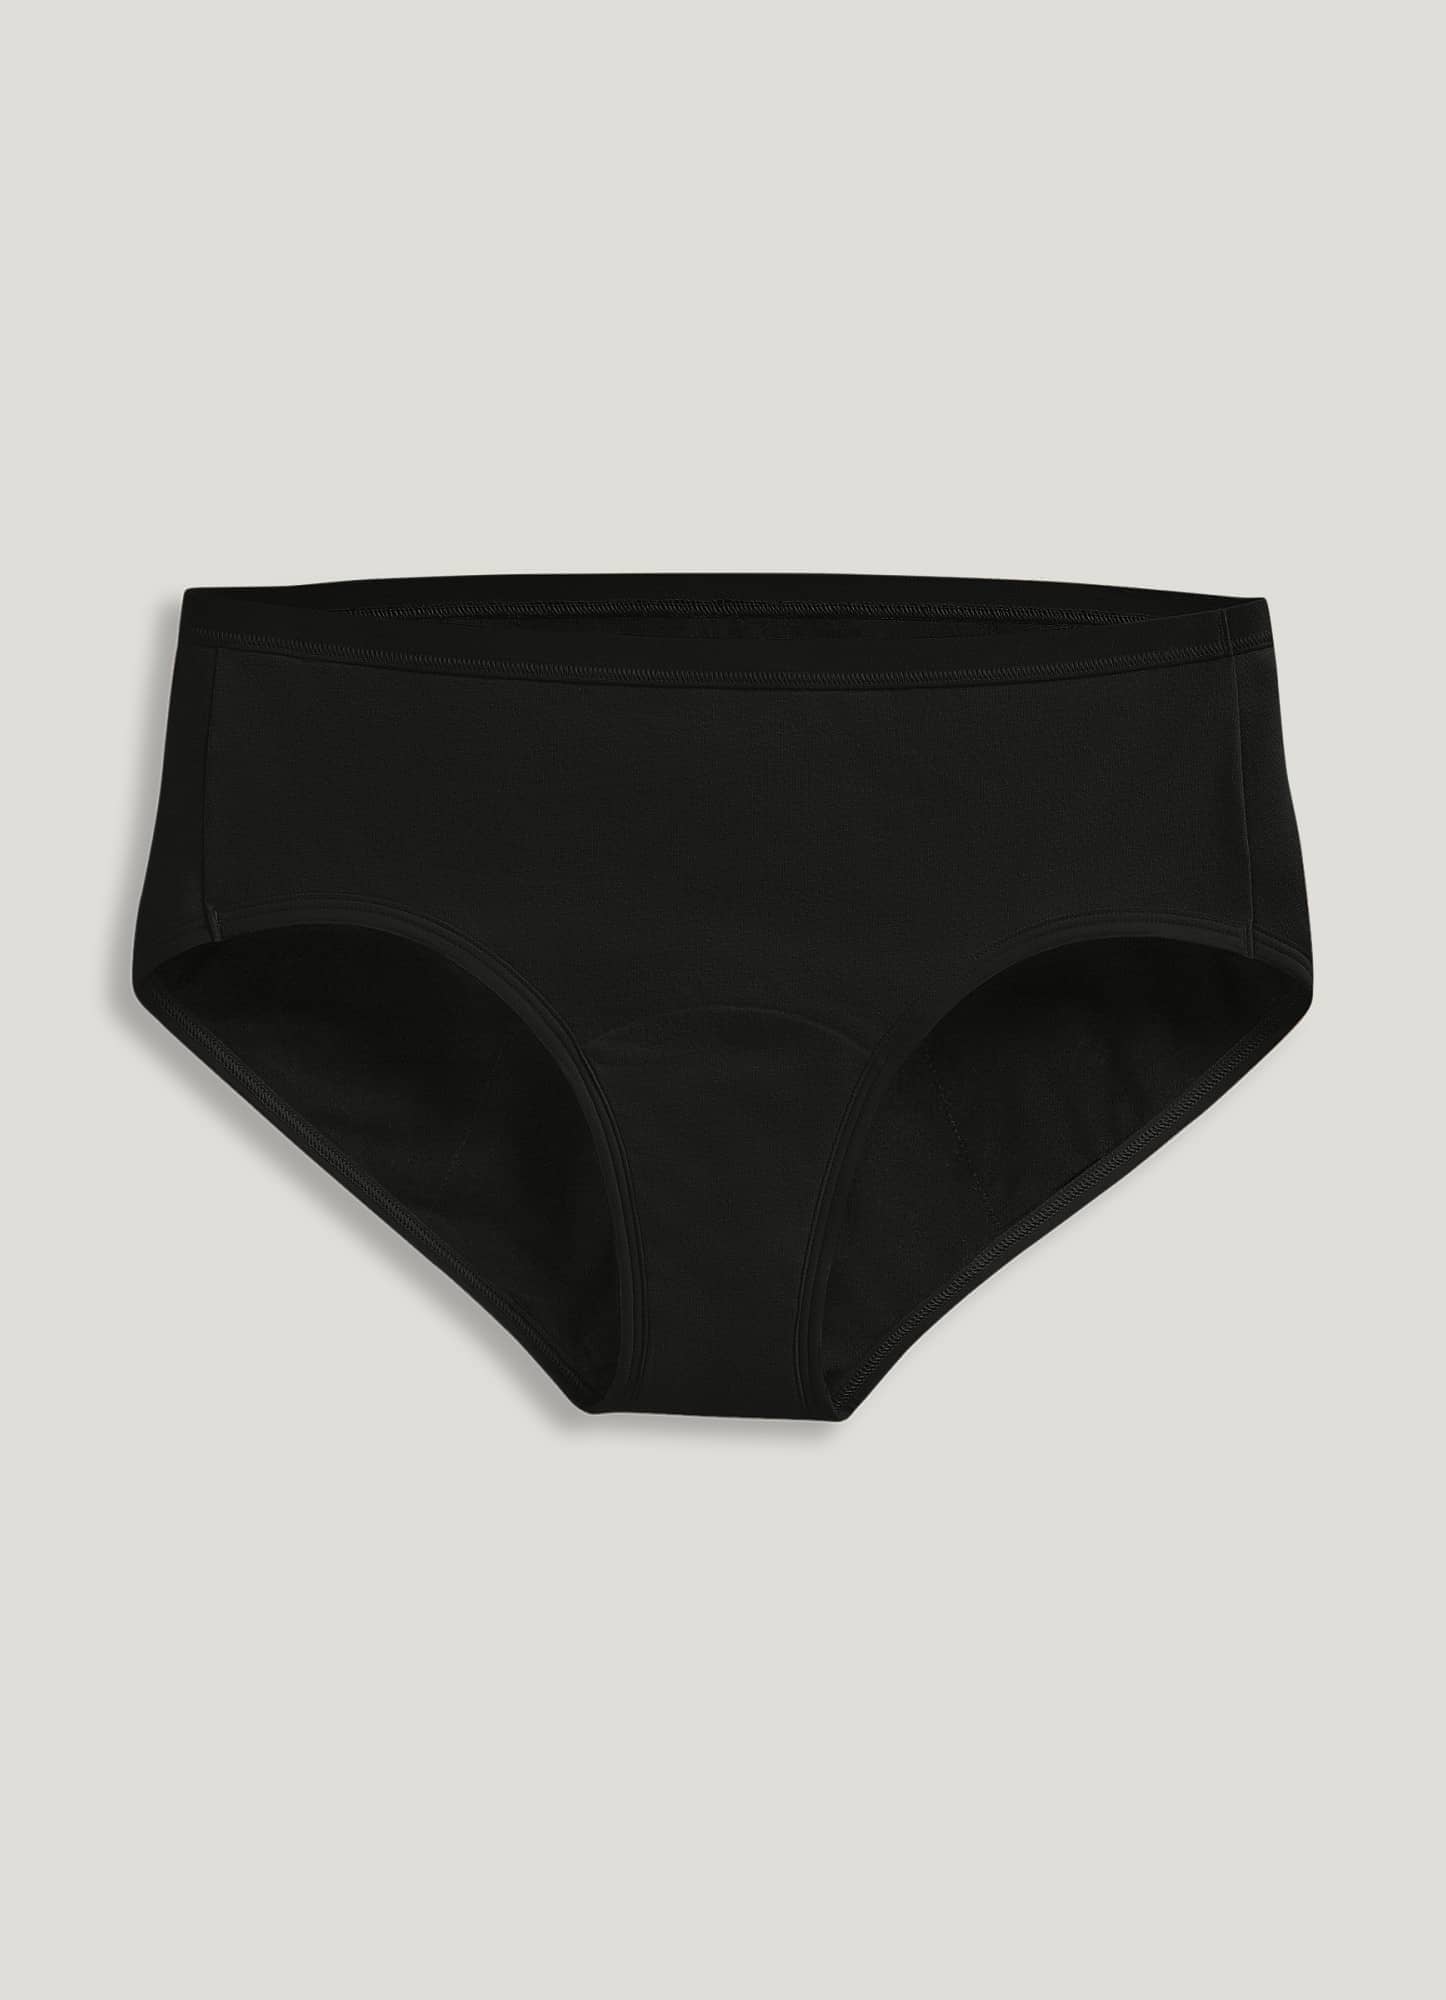 Jockey Women's Underwear Worry Free Cotton Stretch Moderate Absorbency  Brie, Navy, M